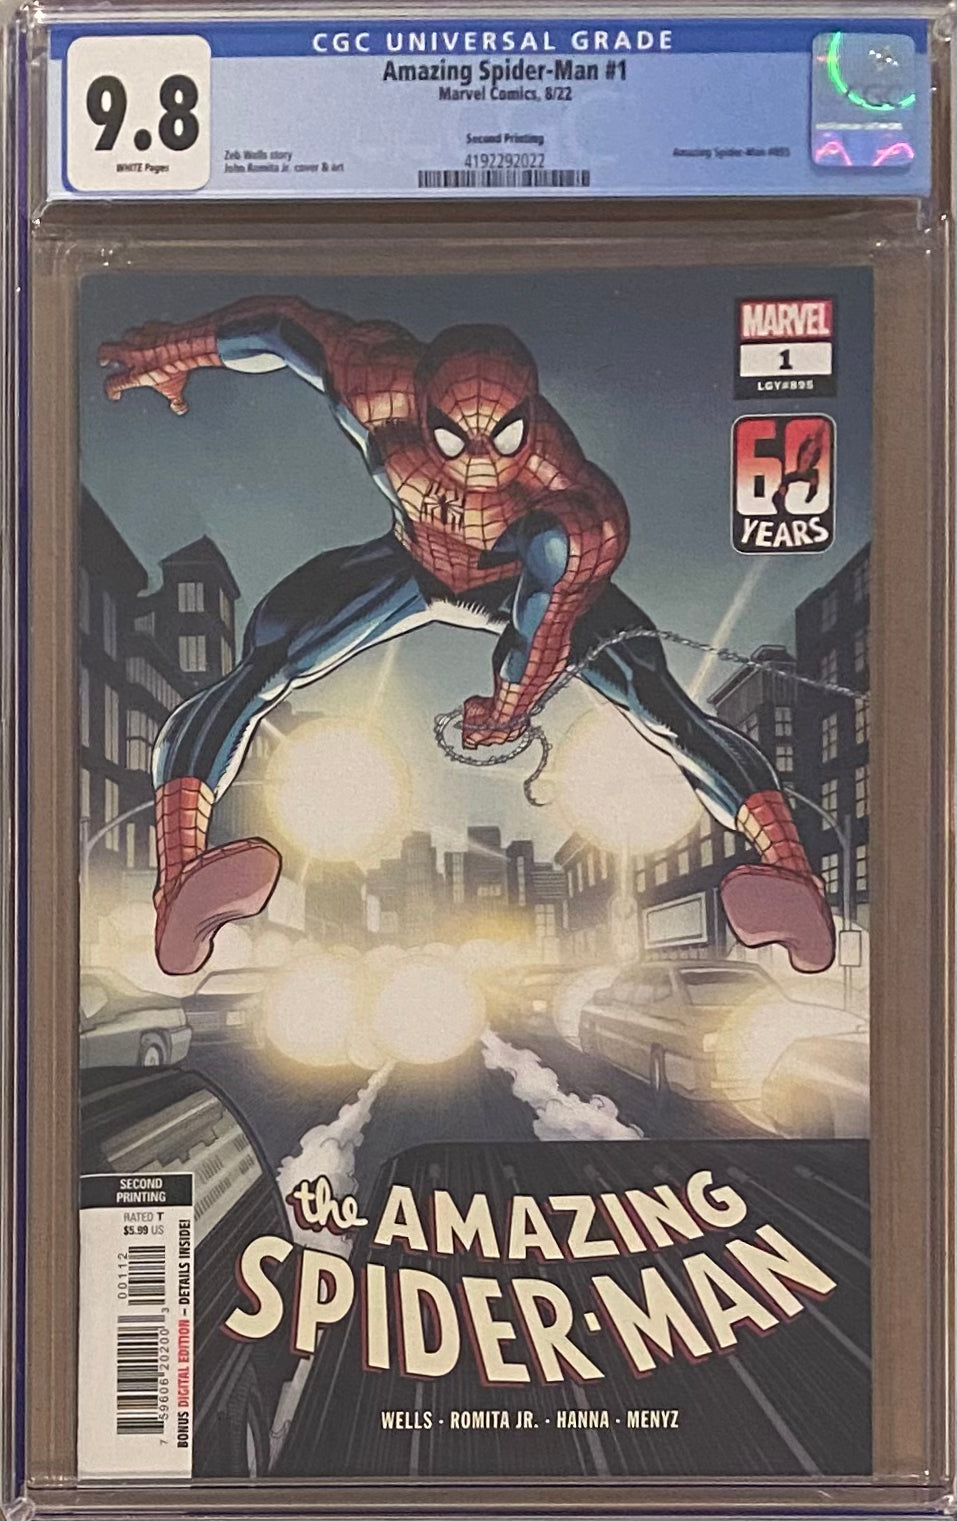 Amazing Spider-Man #1 Second Printing CGC 9.8